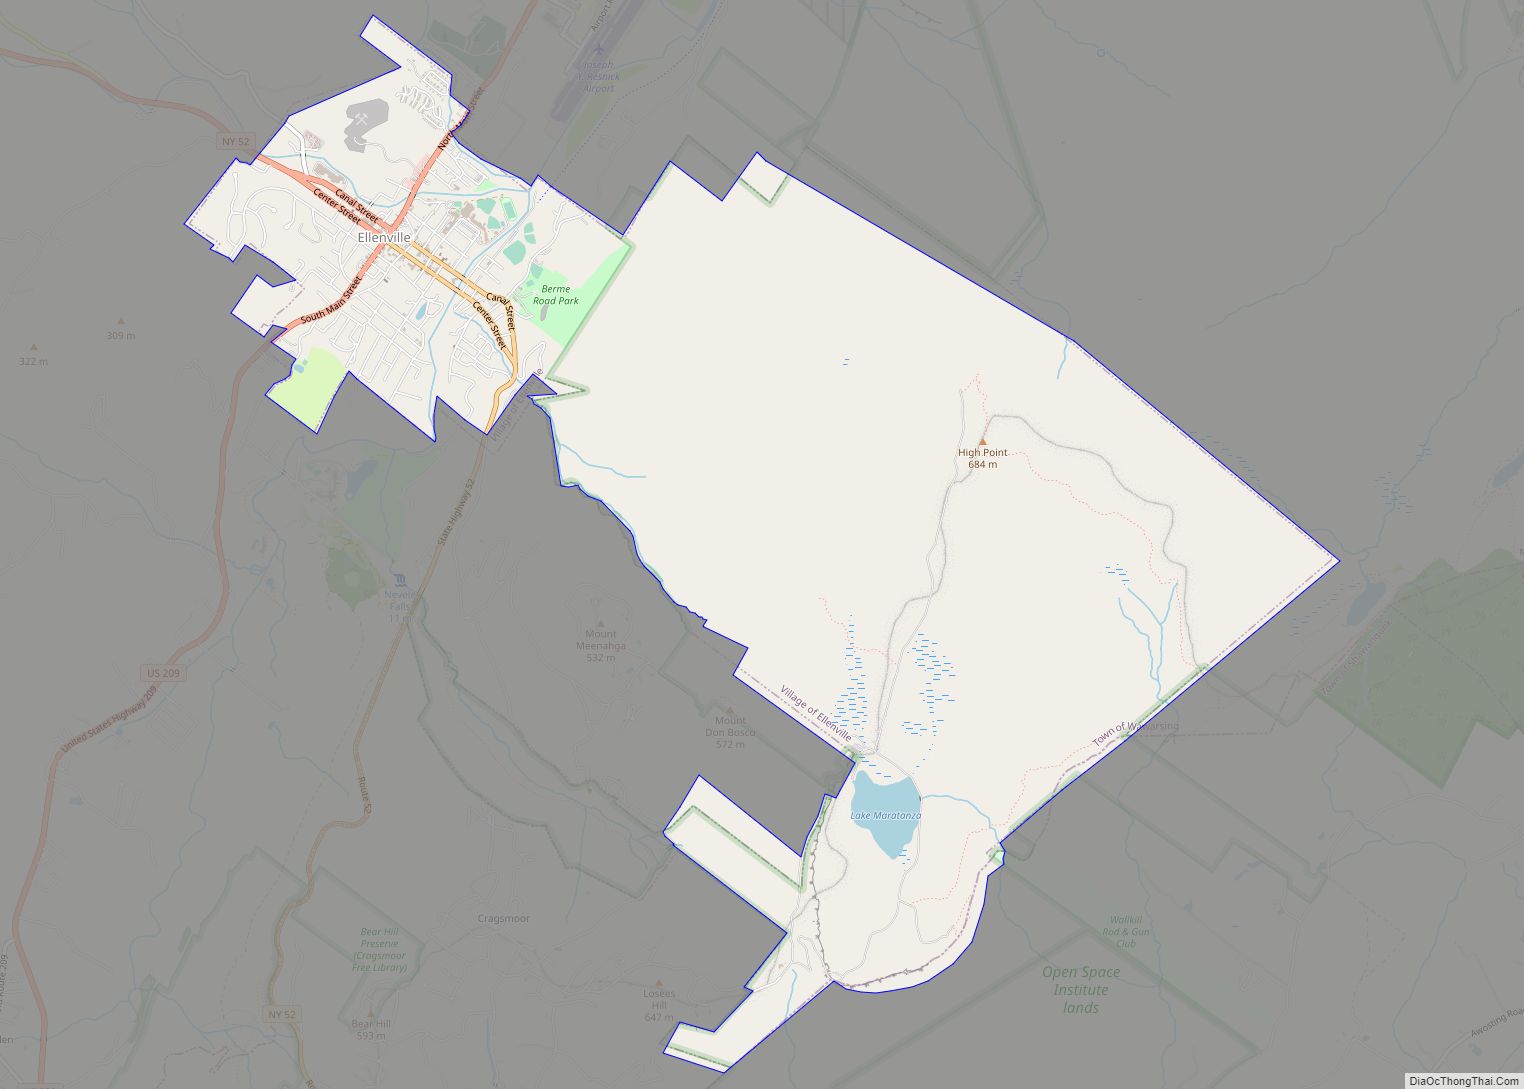 Map of Ellenville village